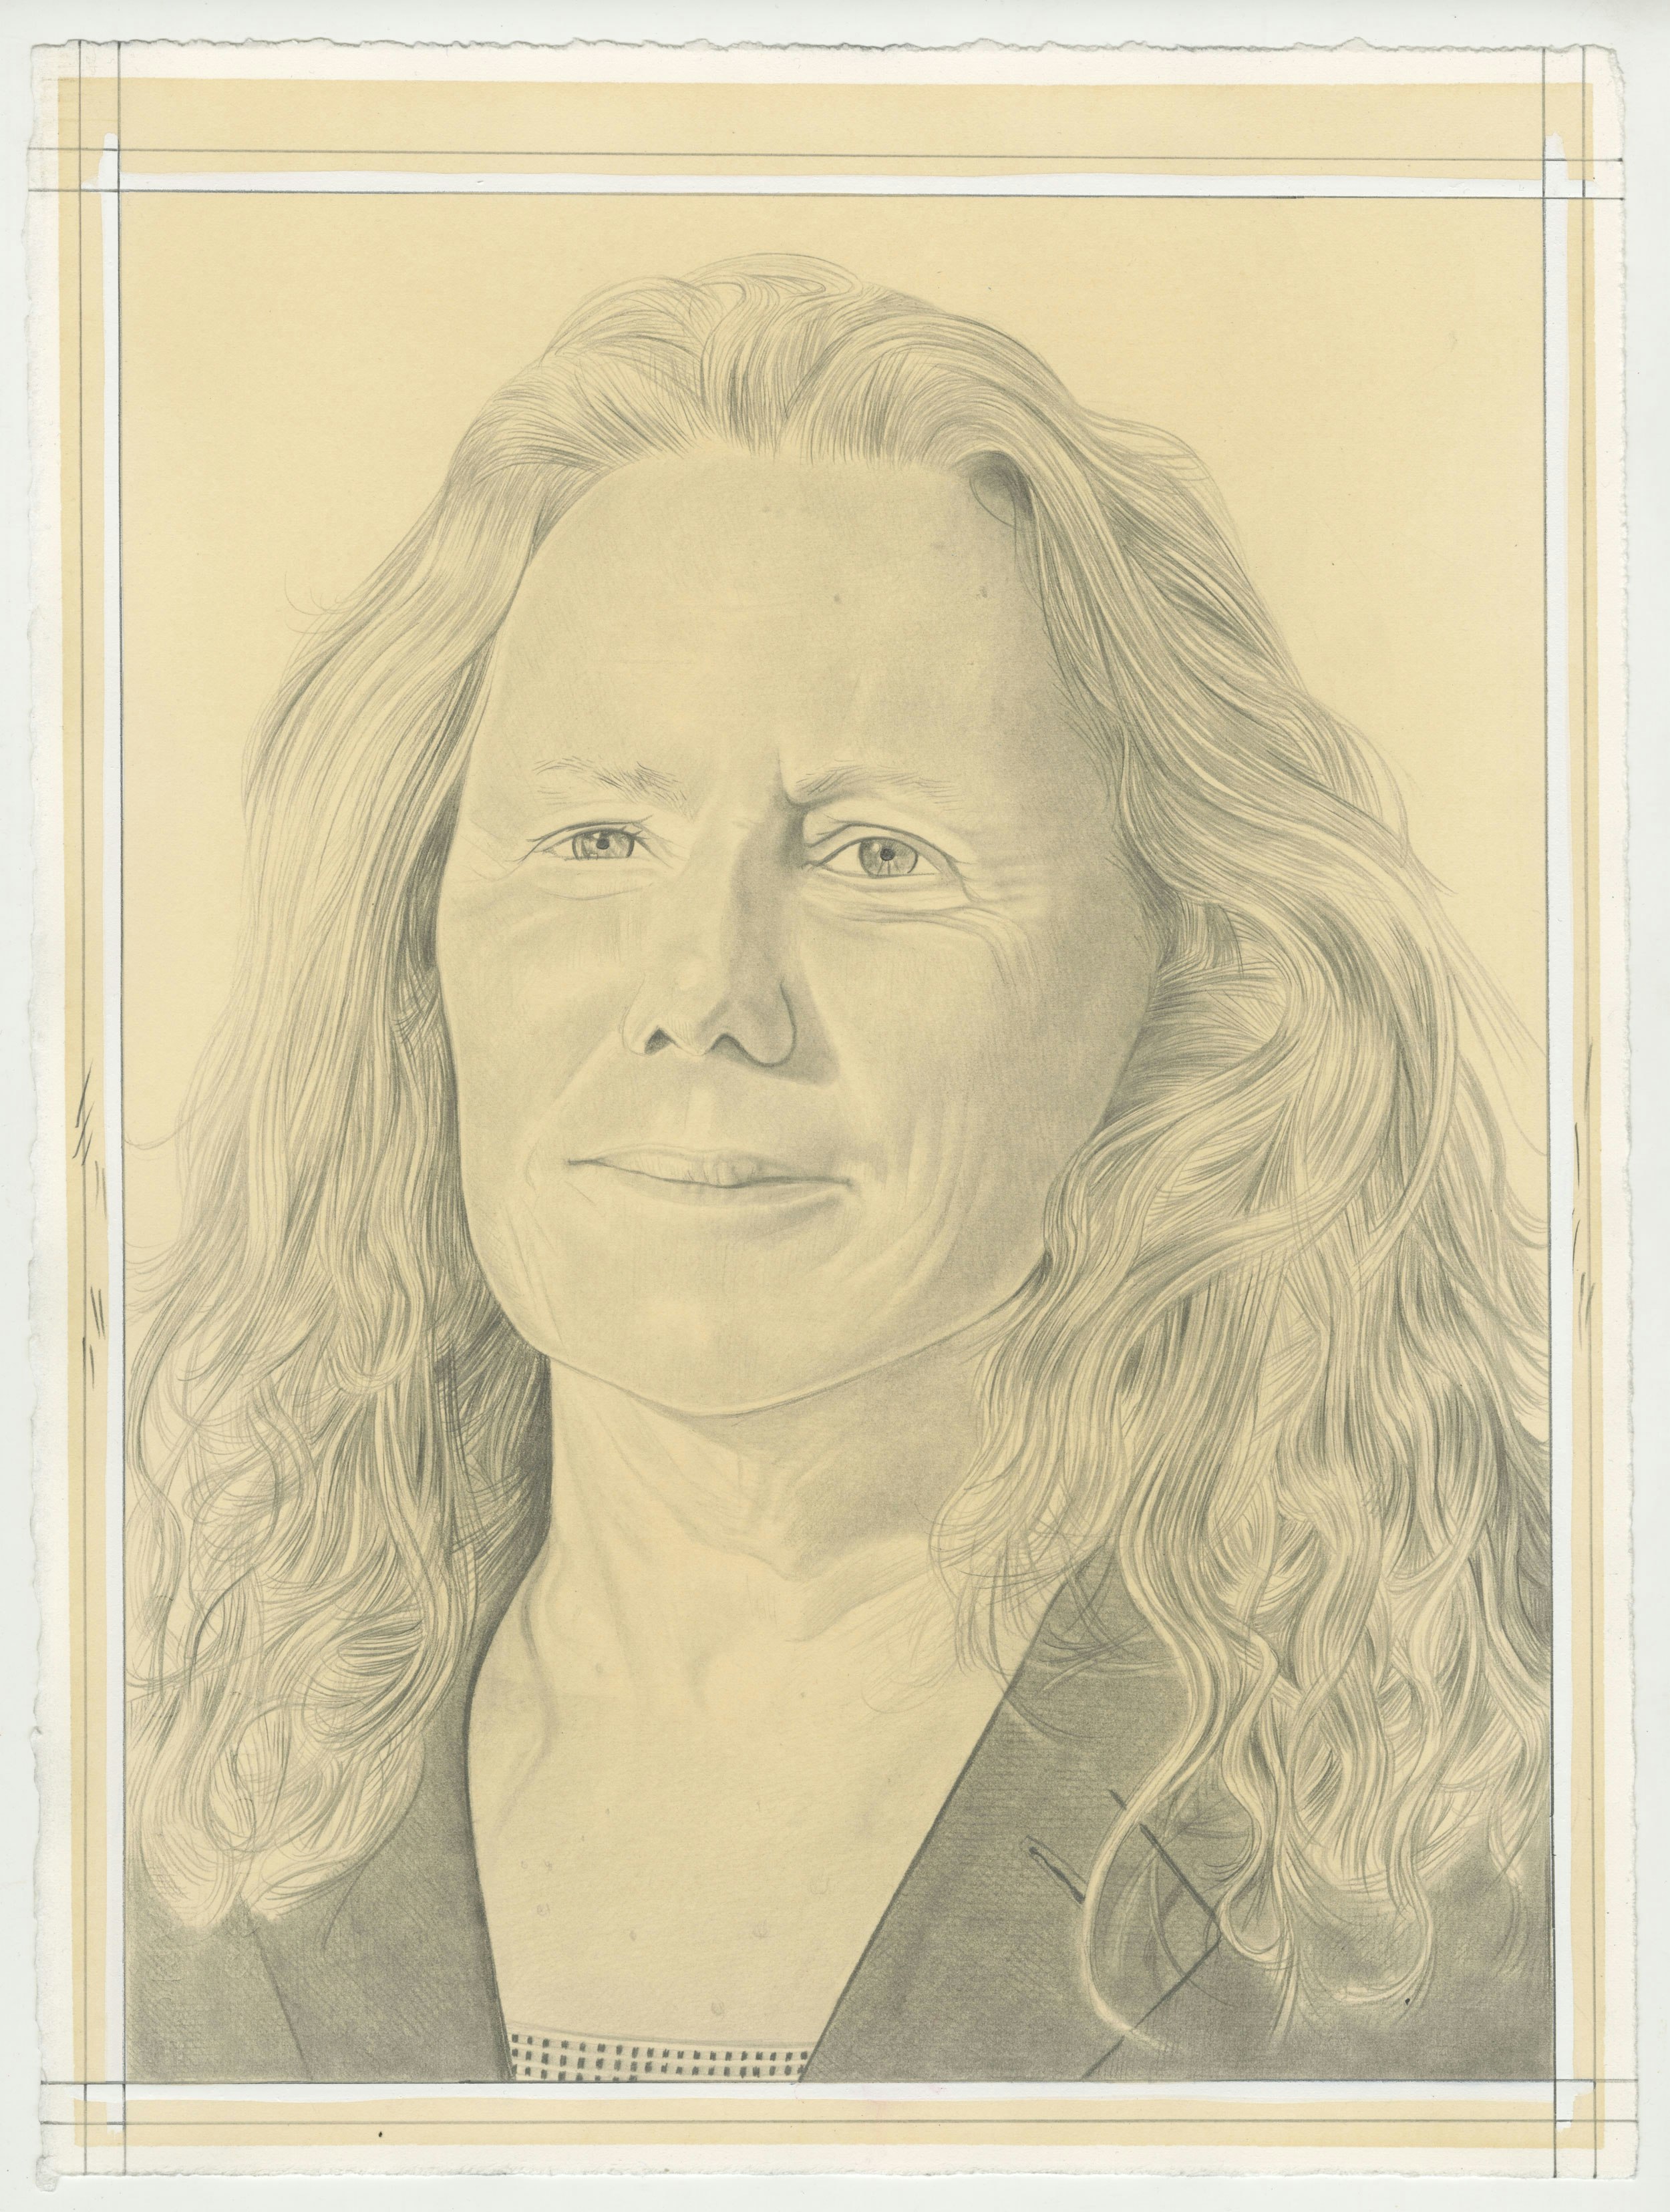 Portrait of Carol Szymanski, pencil on paper by Phong Bui.